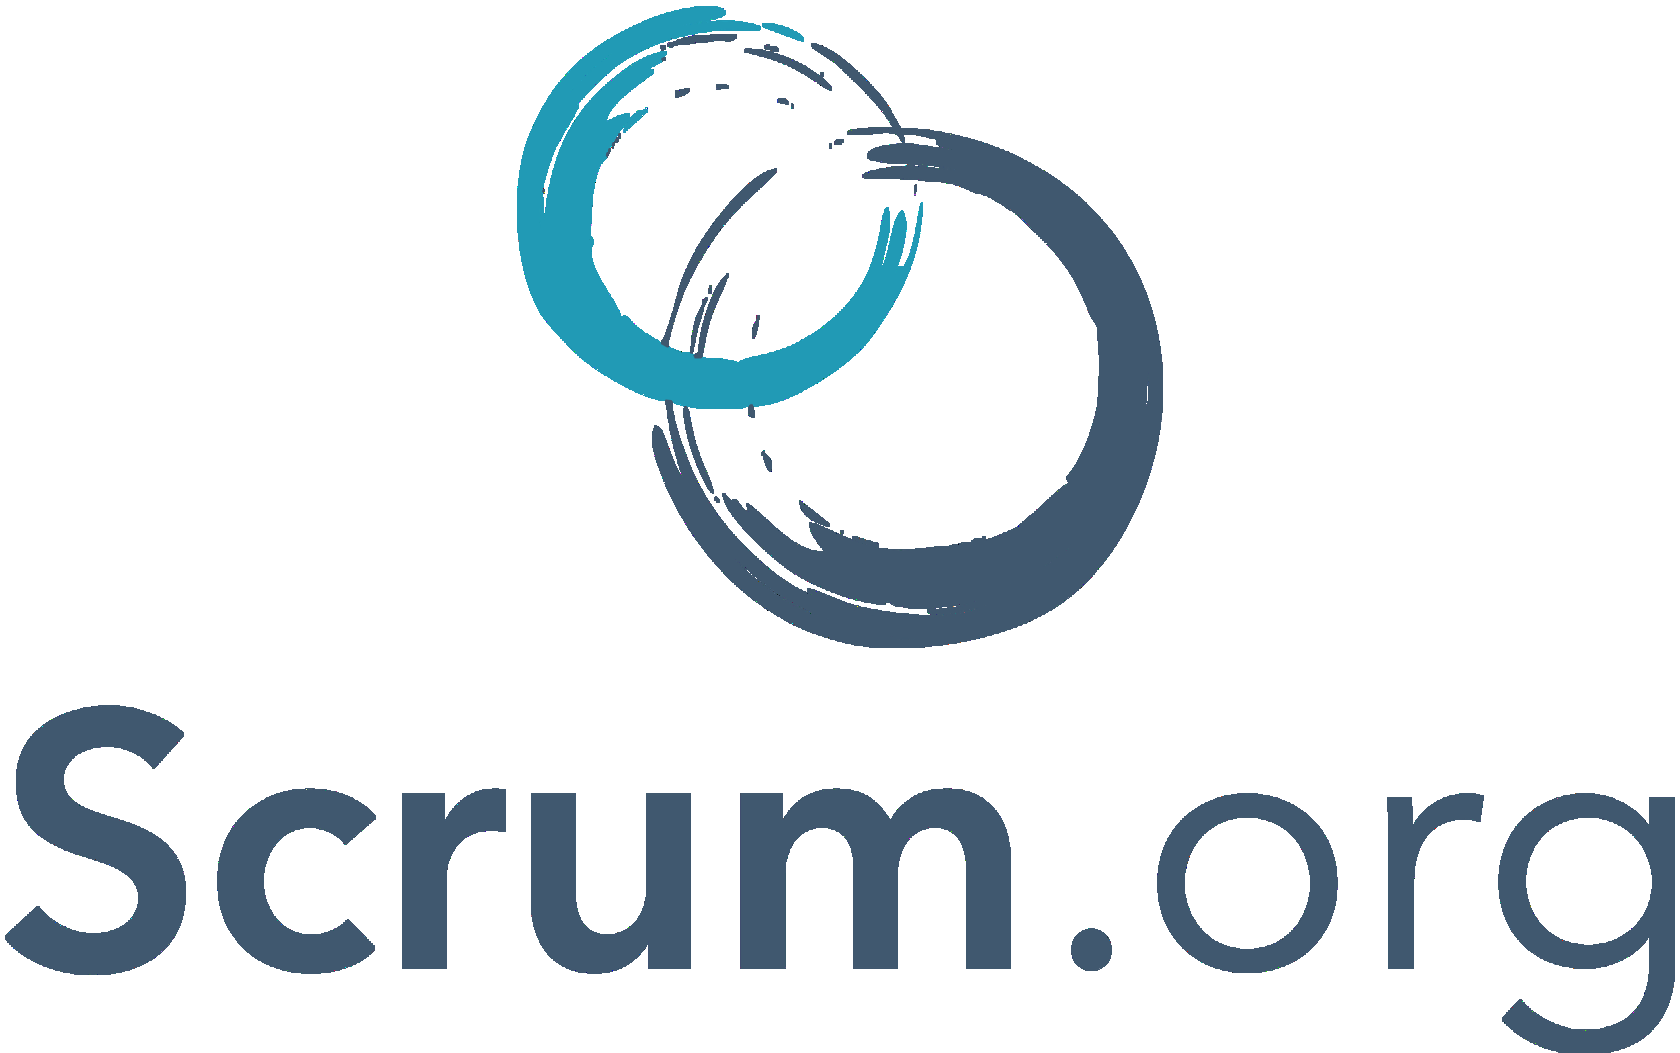 Logos org. Scrum org. Scrum лого. Scrum logo PNG. Scrum Agile logo.